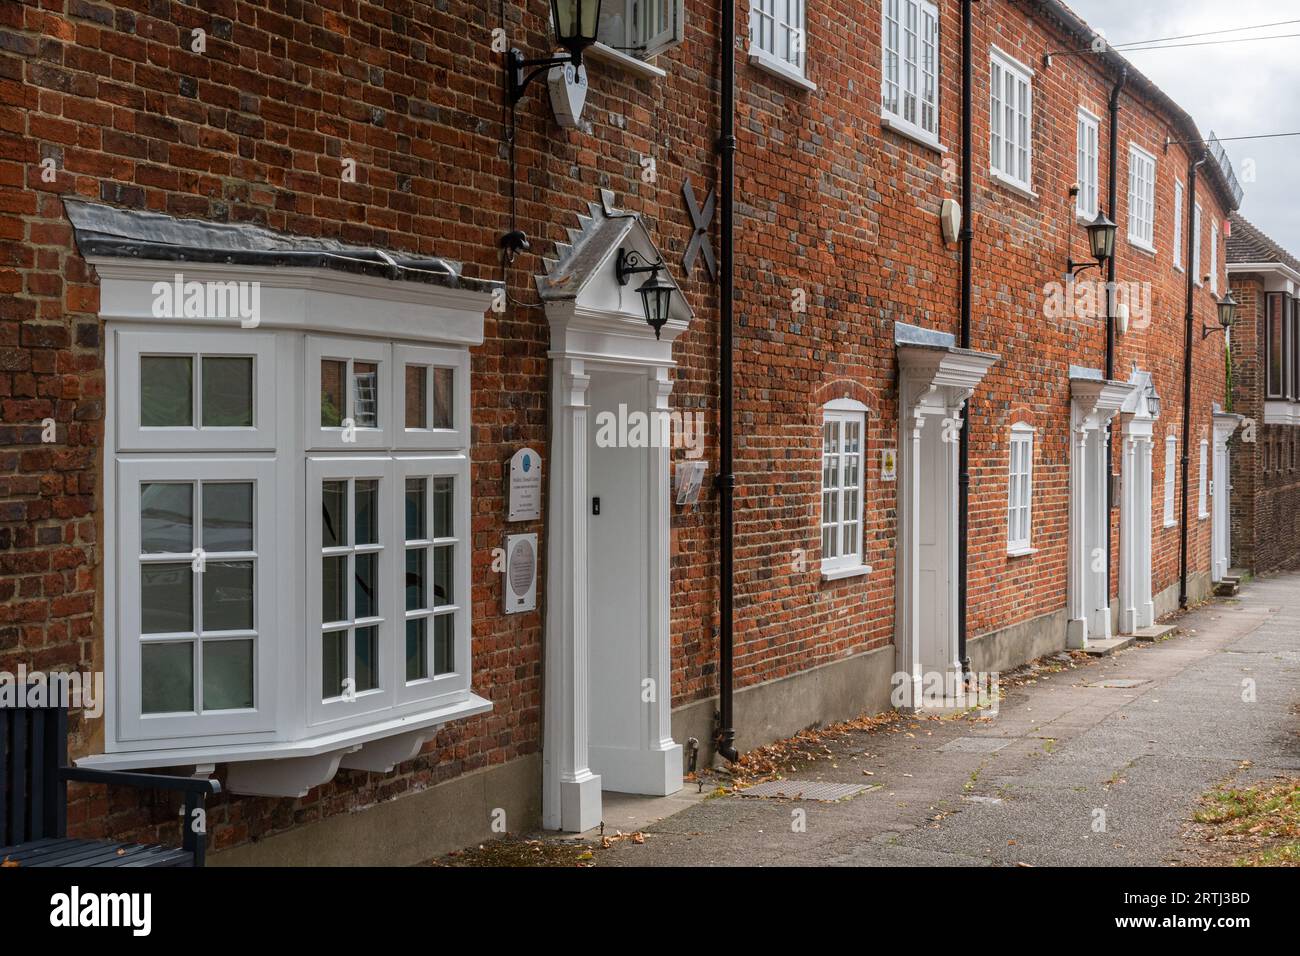 Terrace of Georgian style houses or properties in Farnham, Surrey, England, UK. Theme: property, housing, real estate Stock Photo